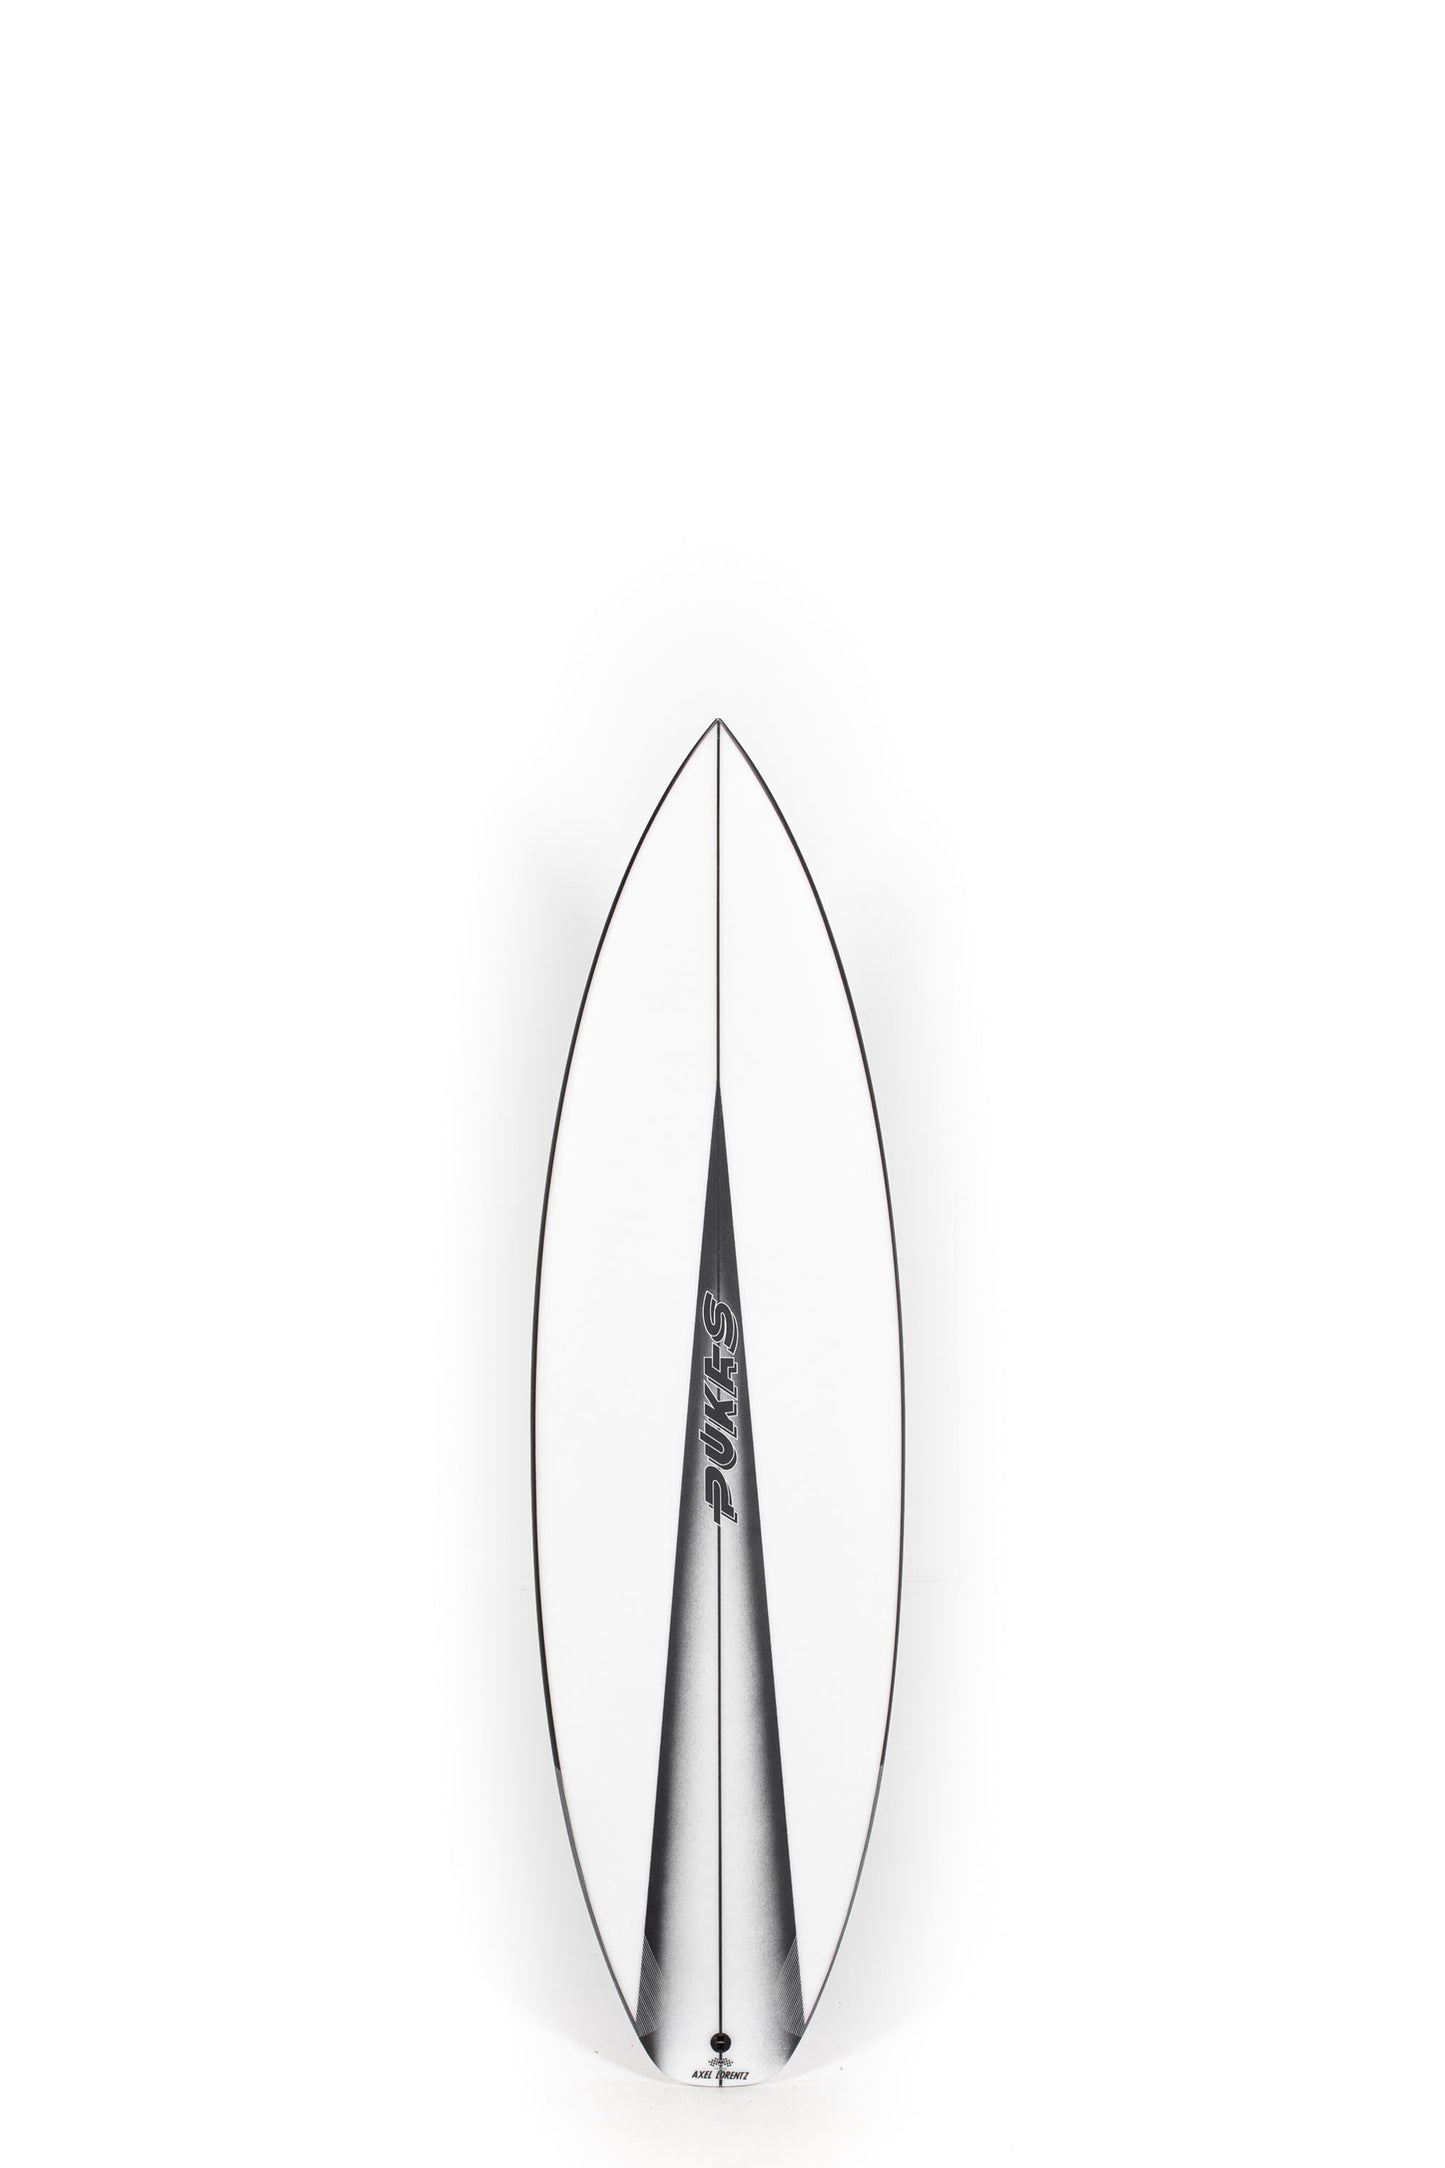 Pukas Surf Shop - Pukas Surfboard - DARKER by Axel Lorentz - 5'9" x 19,13 x 2,28 x 26,72L. - AX09205